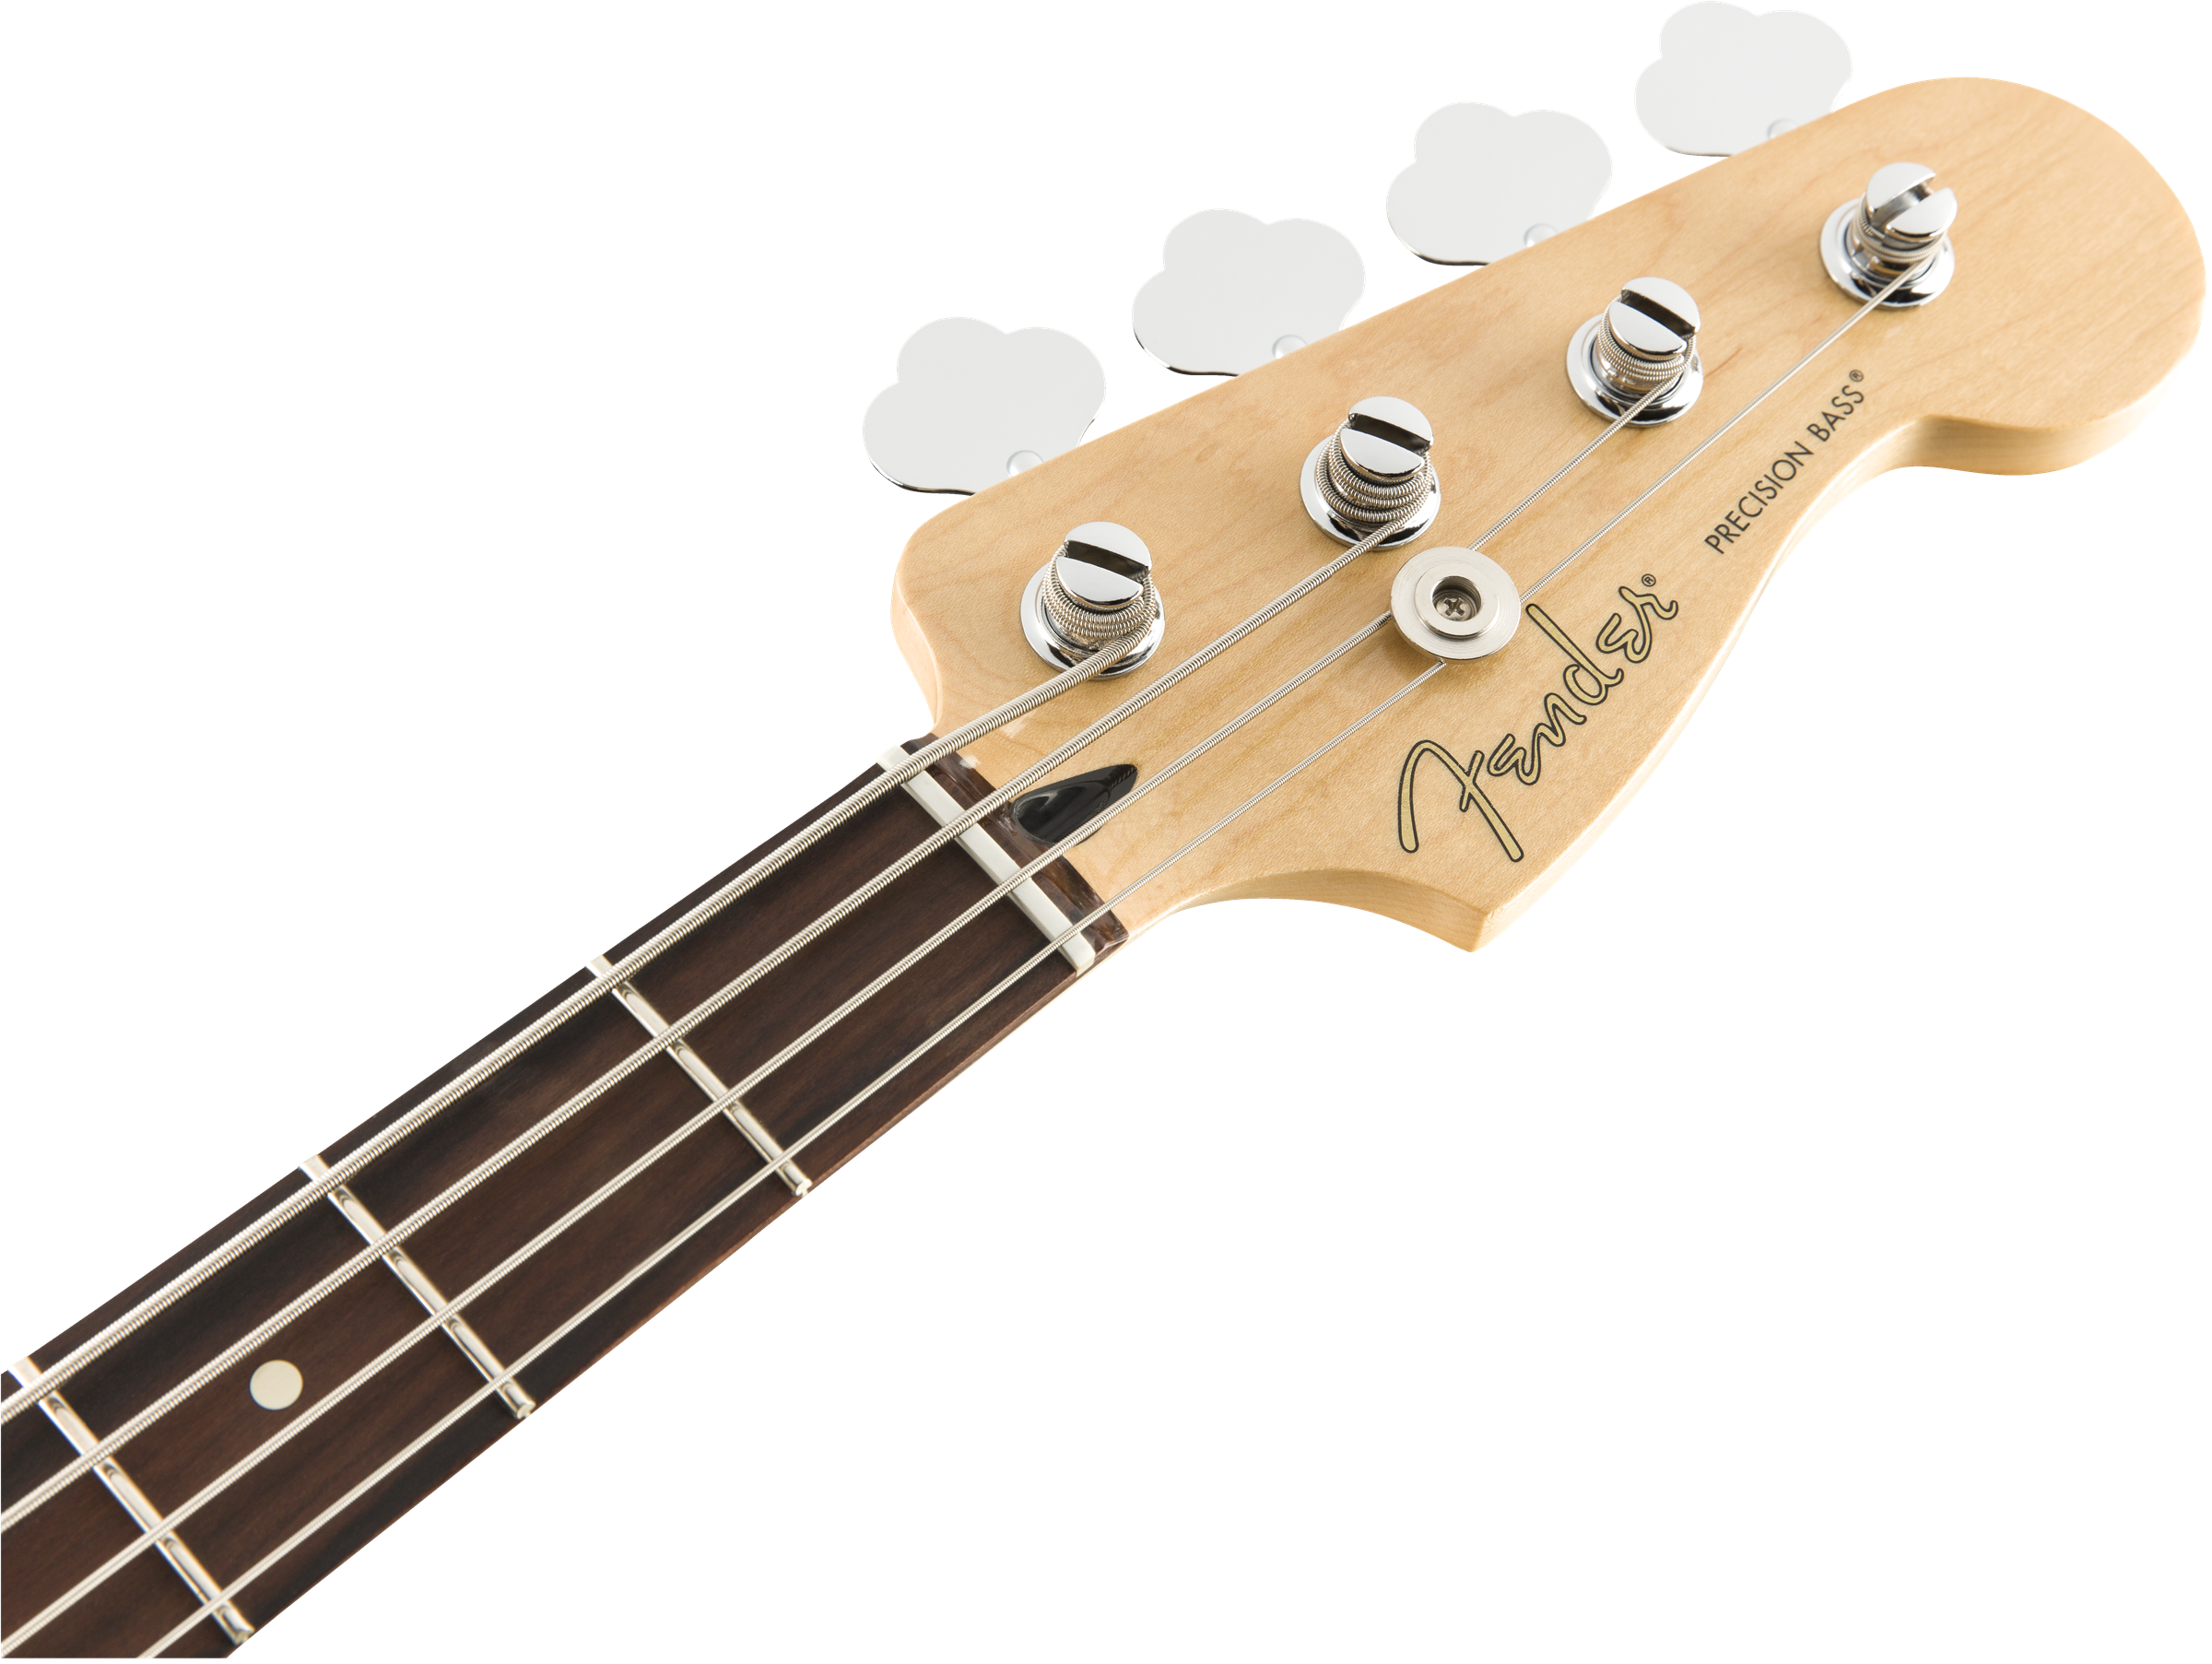 Fender Player Precision Bass®, Pau Ferro Fingerboard, Black